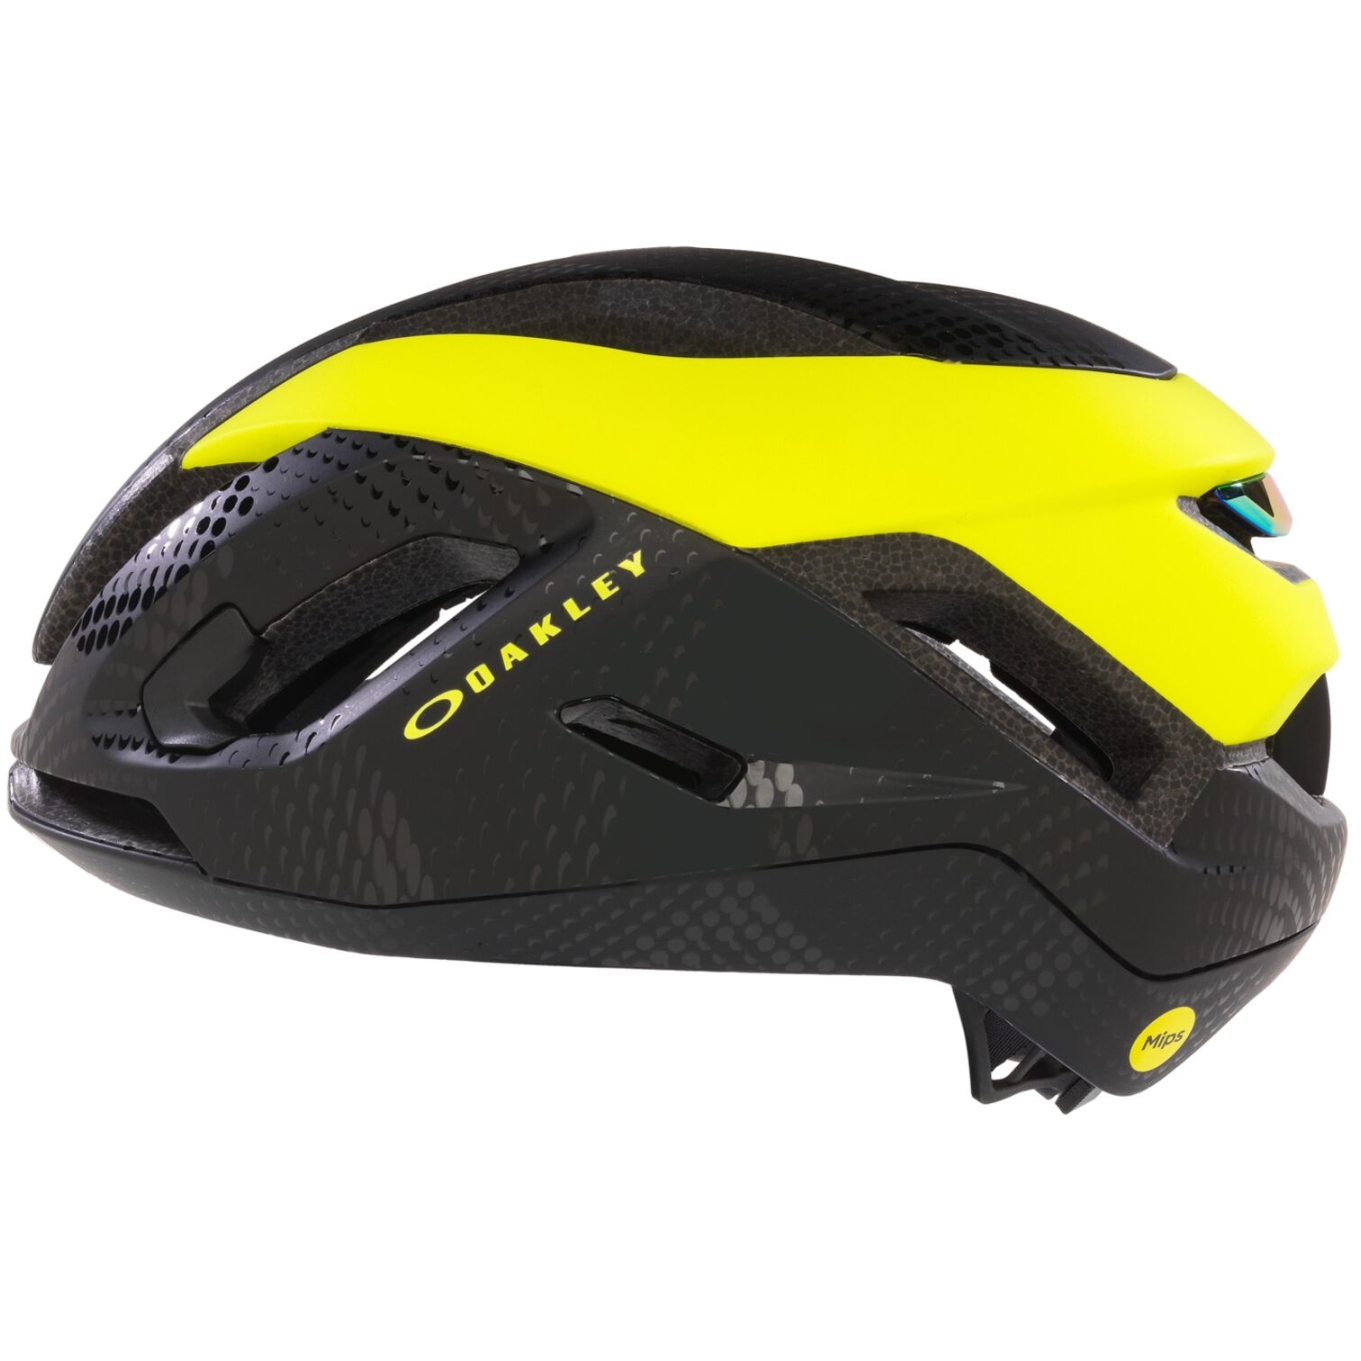 Picture of Oakley ARO5 Race EU Helmet - Franktel/Retina Burn